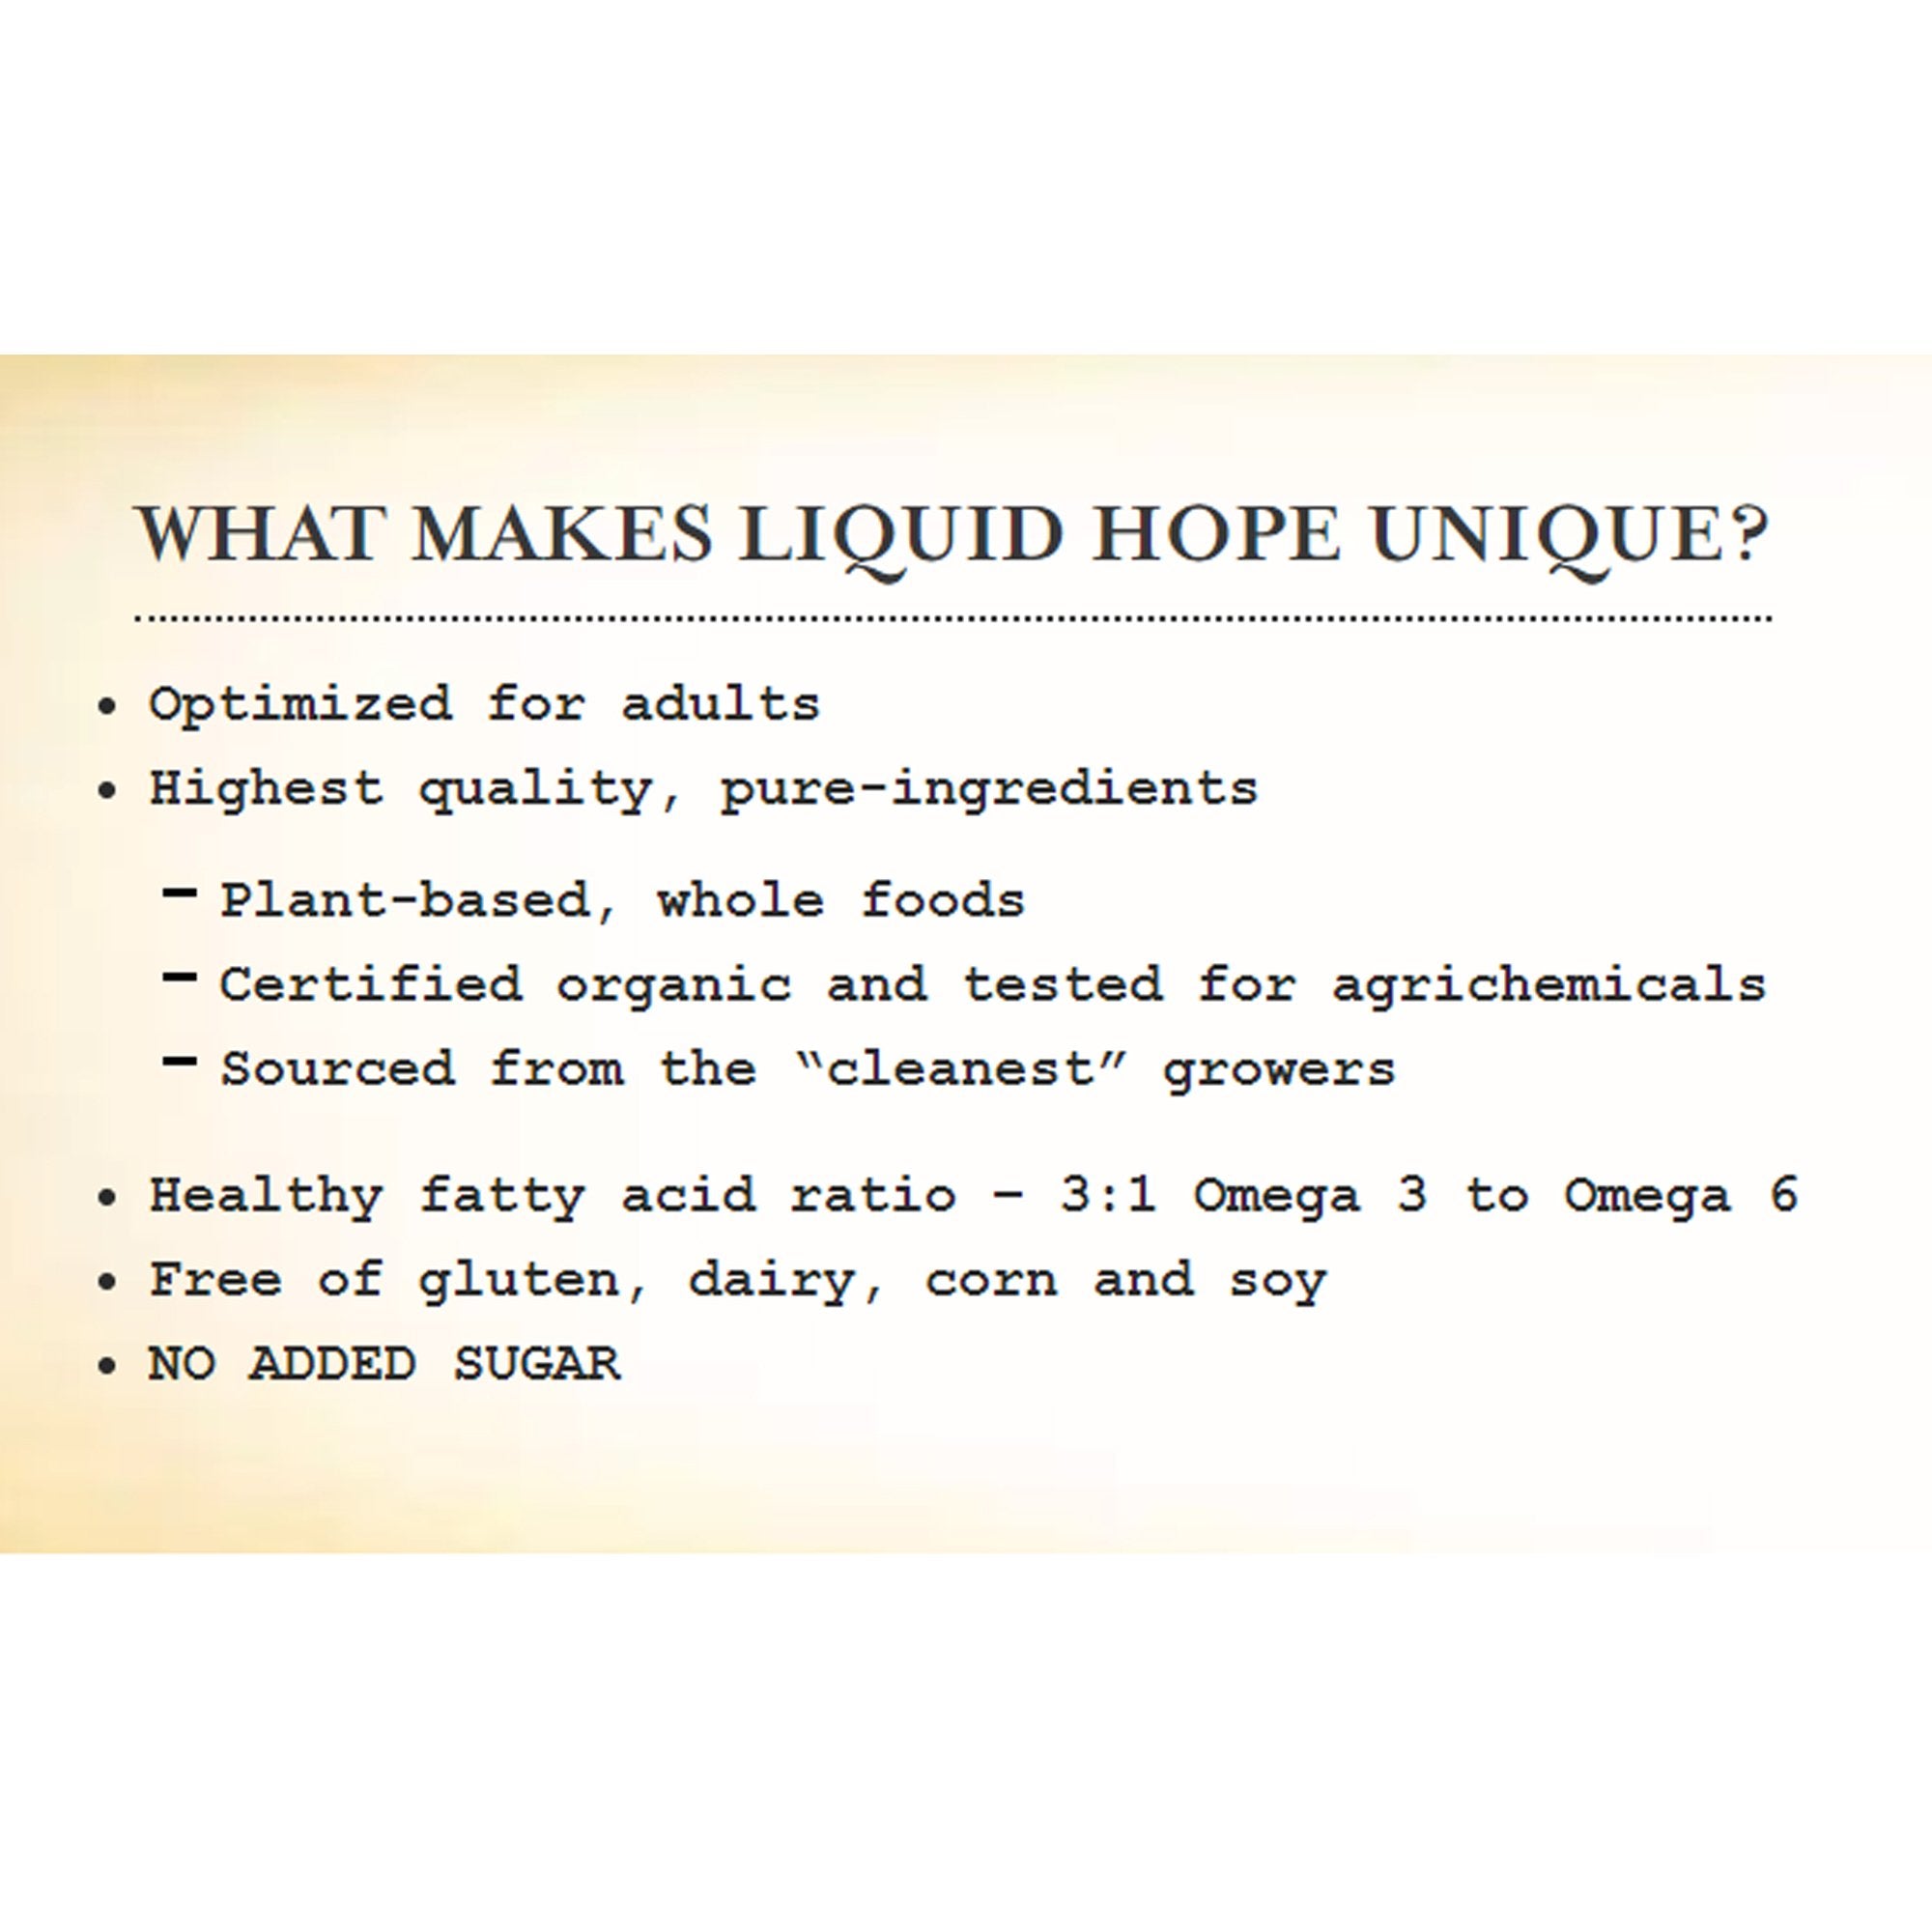 Oral Supplement Liquid Hope Unflavored Liquid 12 oz. Pouch